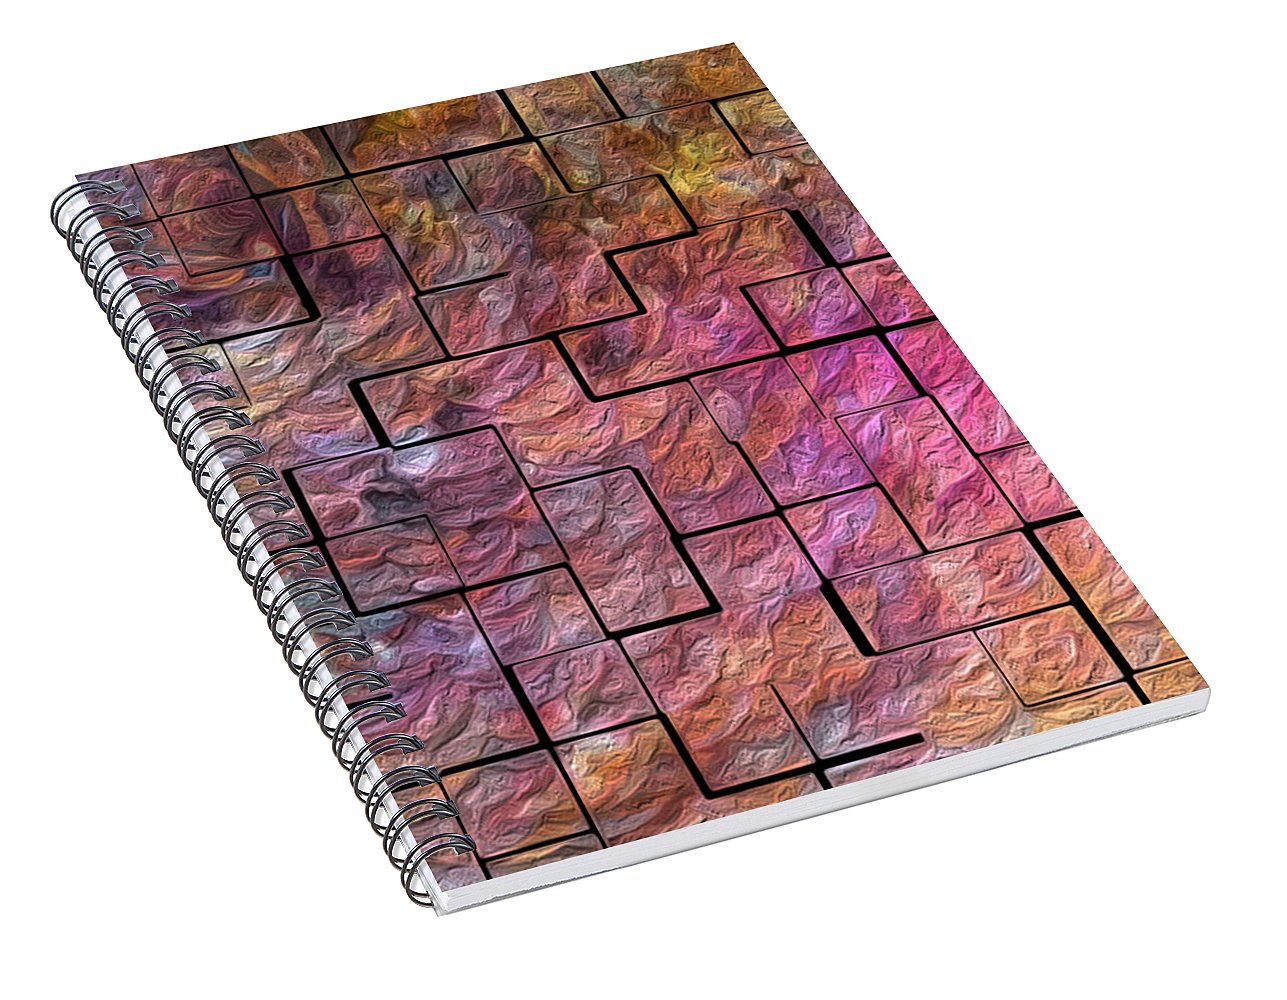 Building Blocks - Spiral Notebook